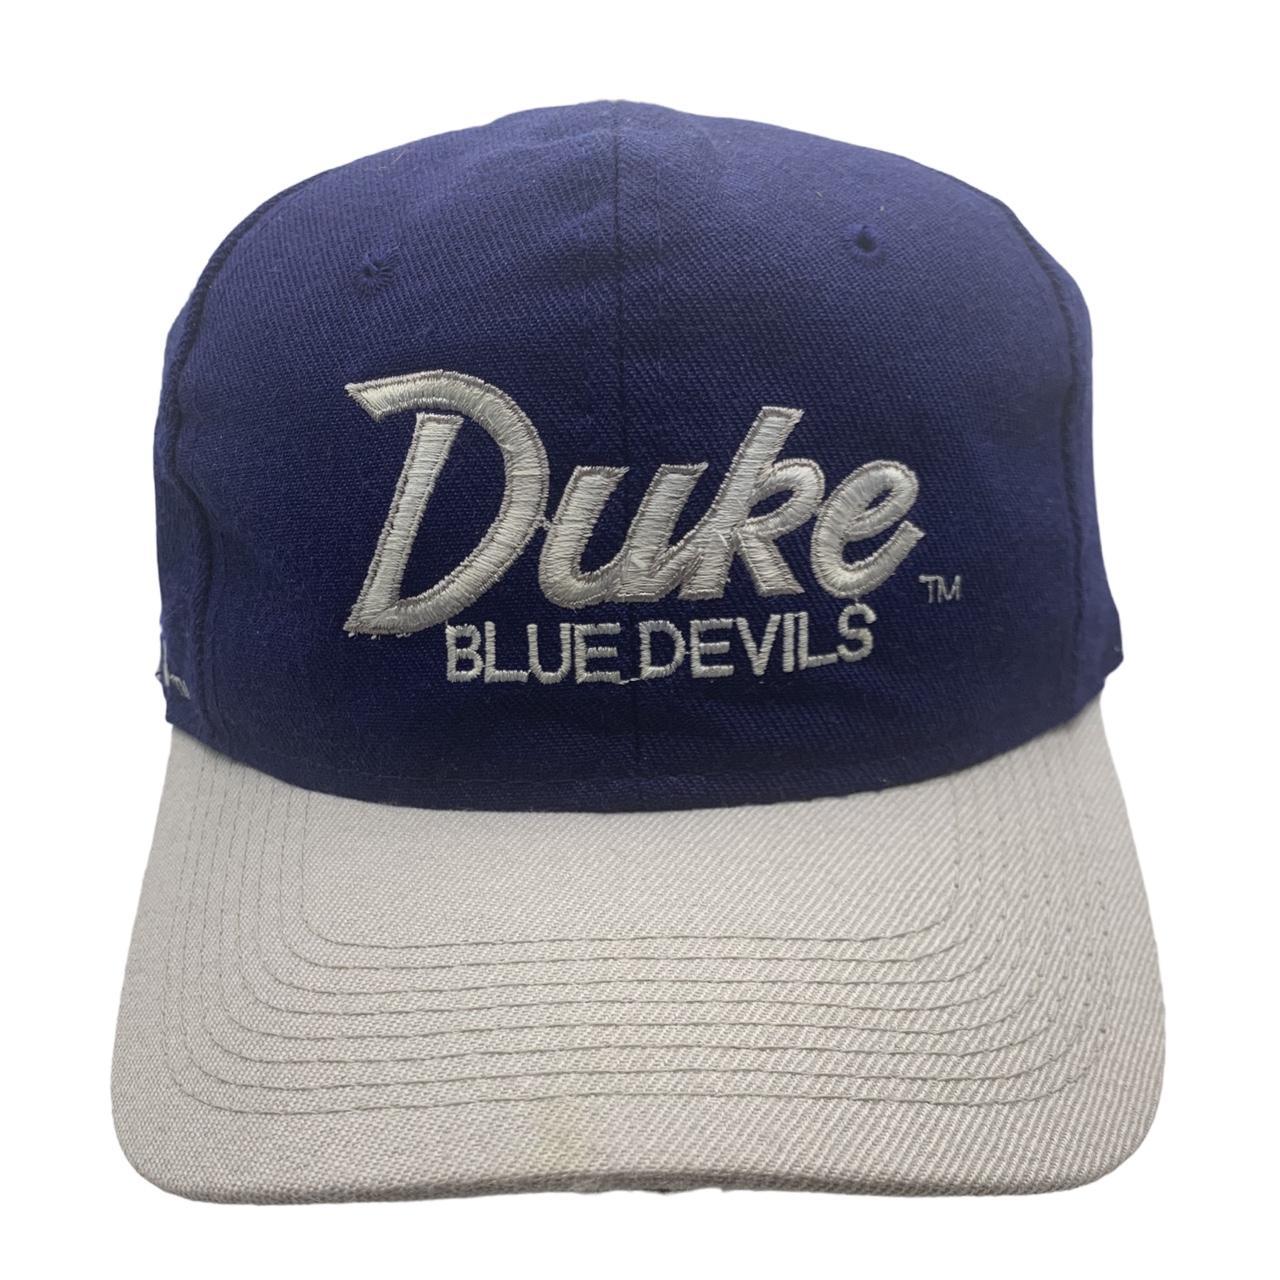 Vintage Duke Blue Devils Sports Specialties Fitted Hat Cap 